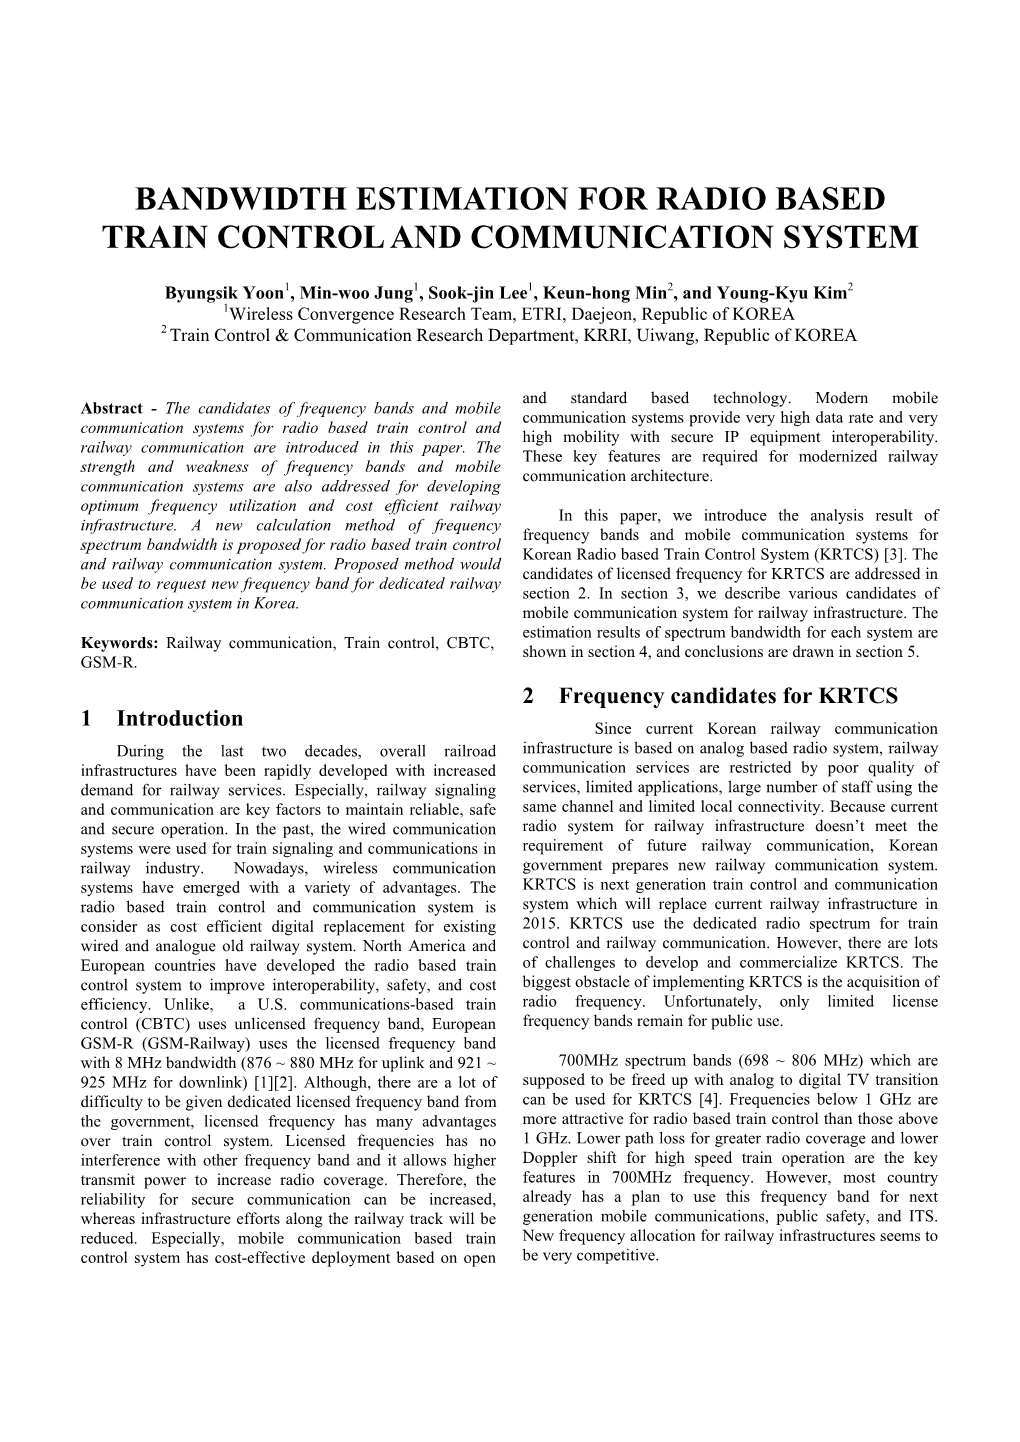 Bandwidth Estimation for Radio Based Train Control and Communication System